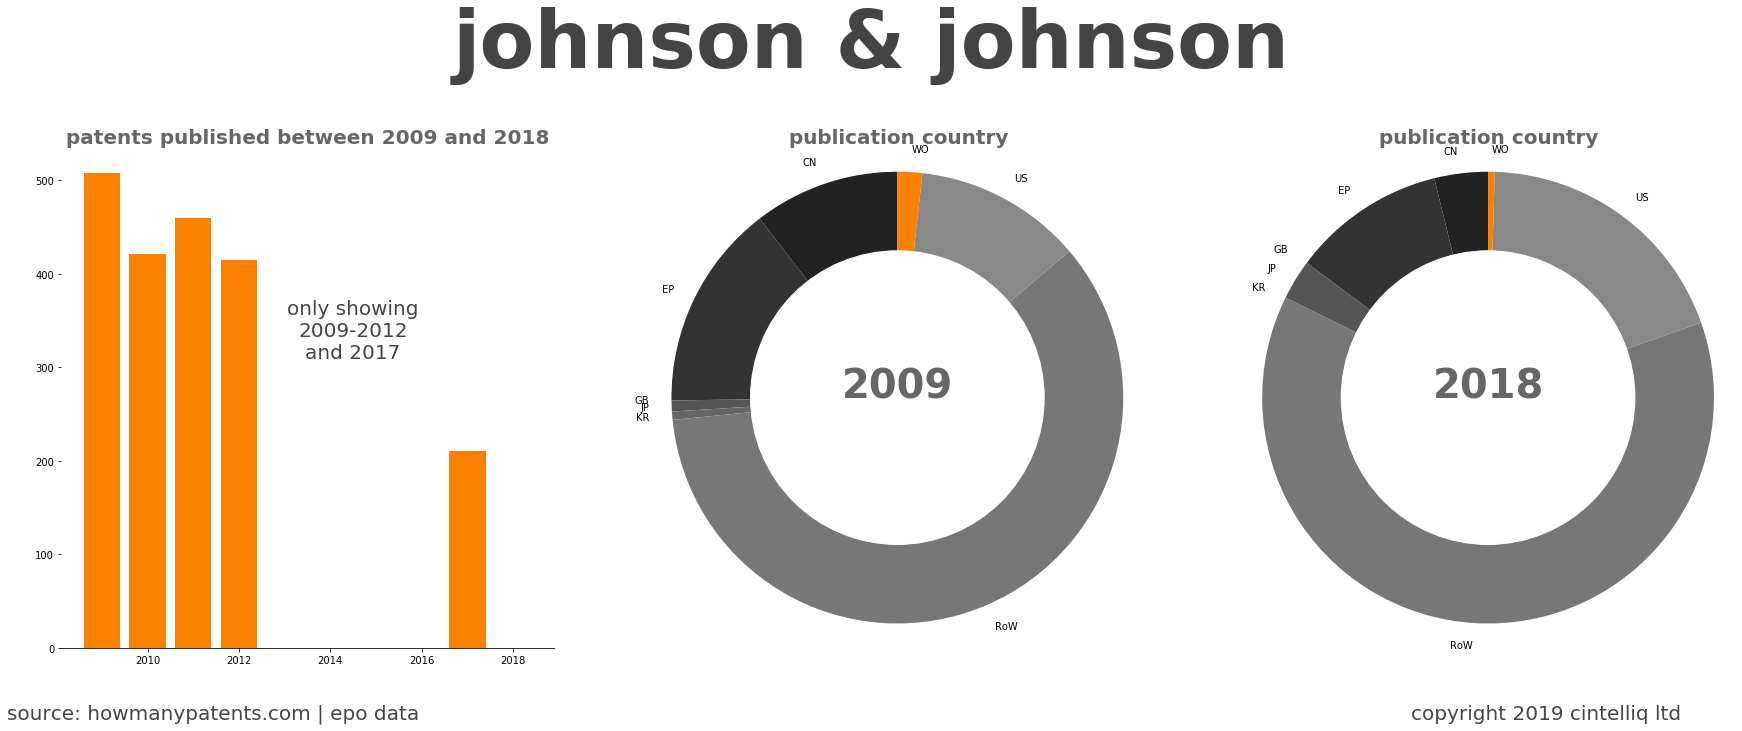 summary of patents for Johnson & Johnson